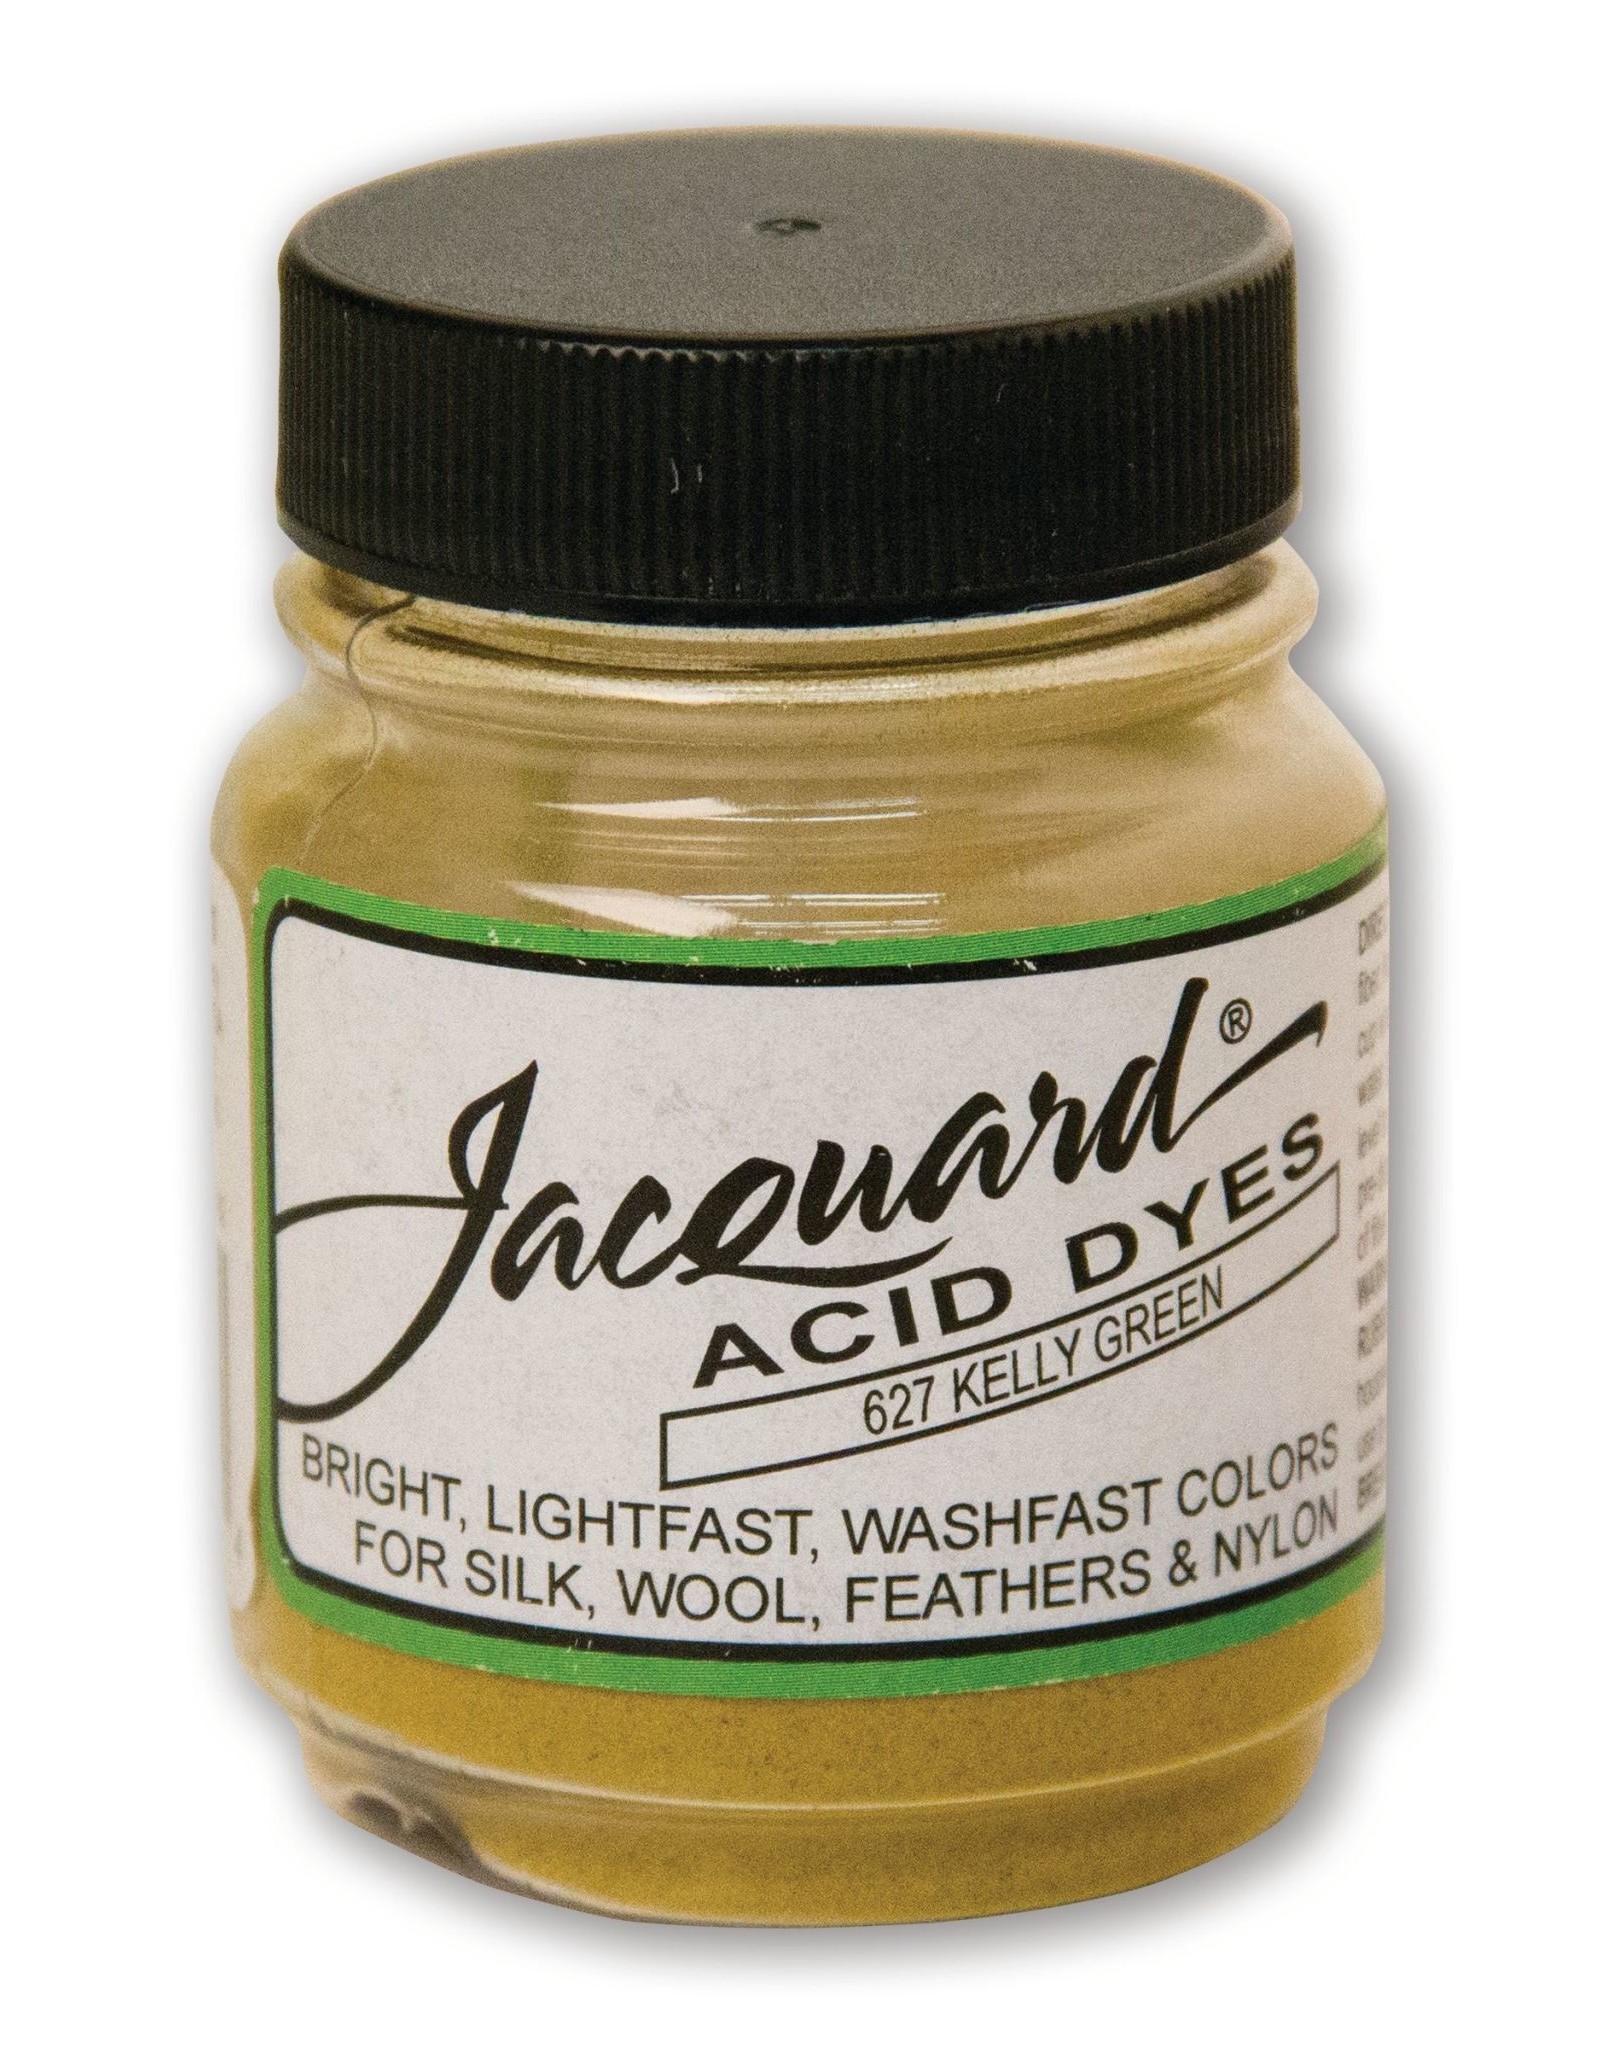 Jacquard Jacquard Acid Dye, #627 Kelly Green ½oz